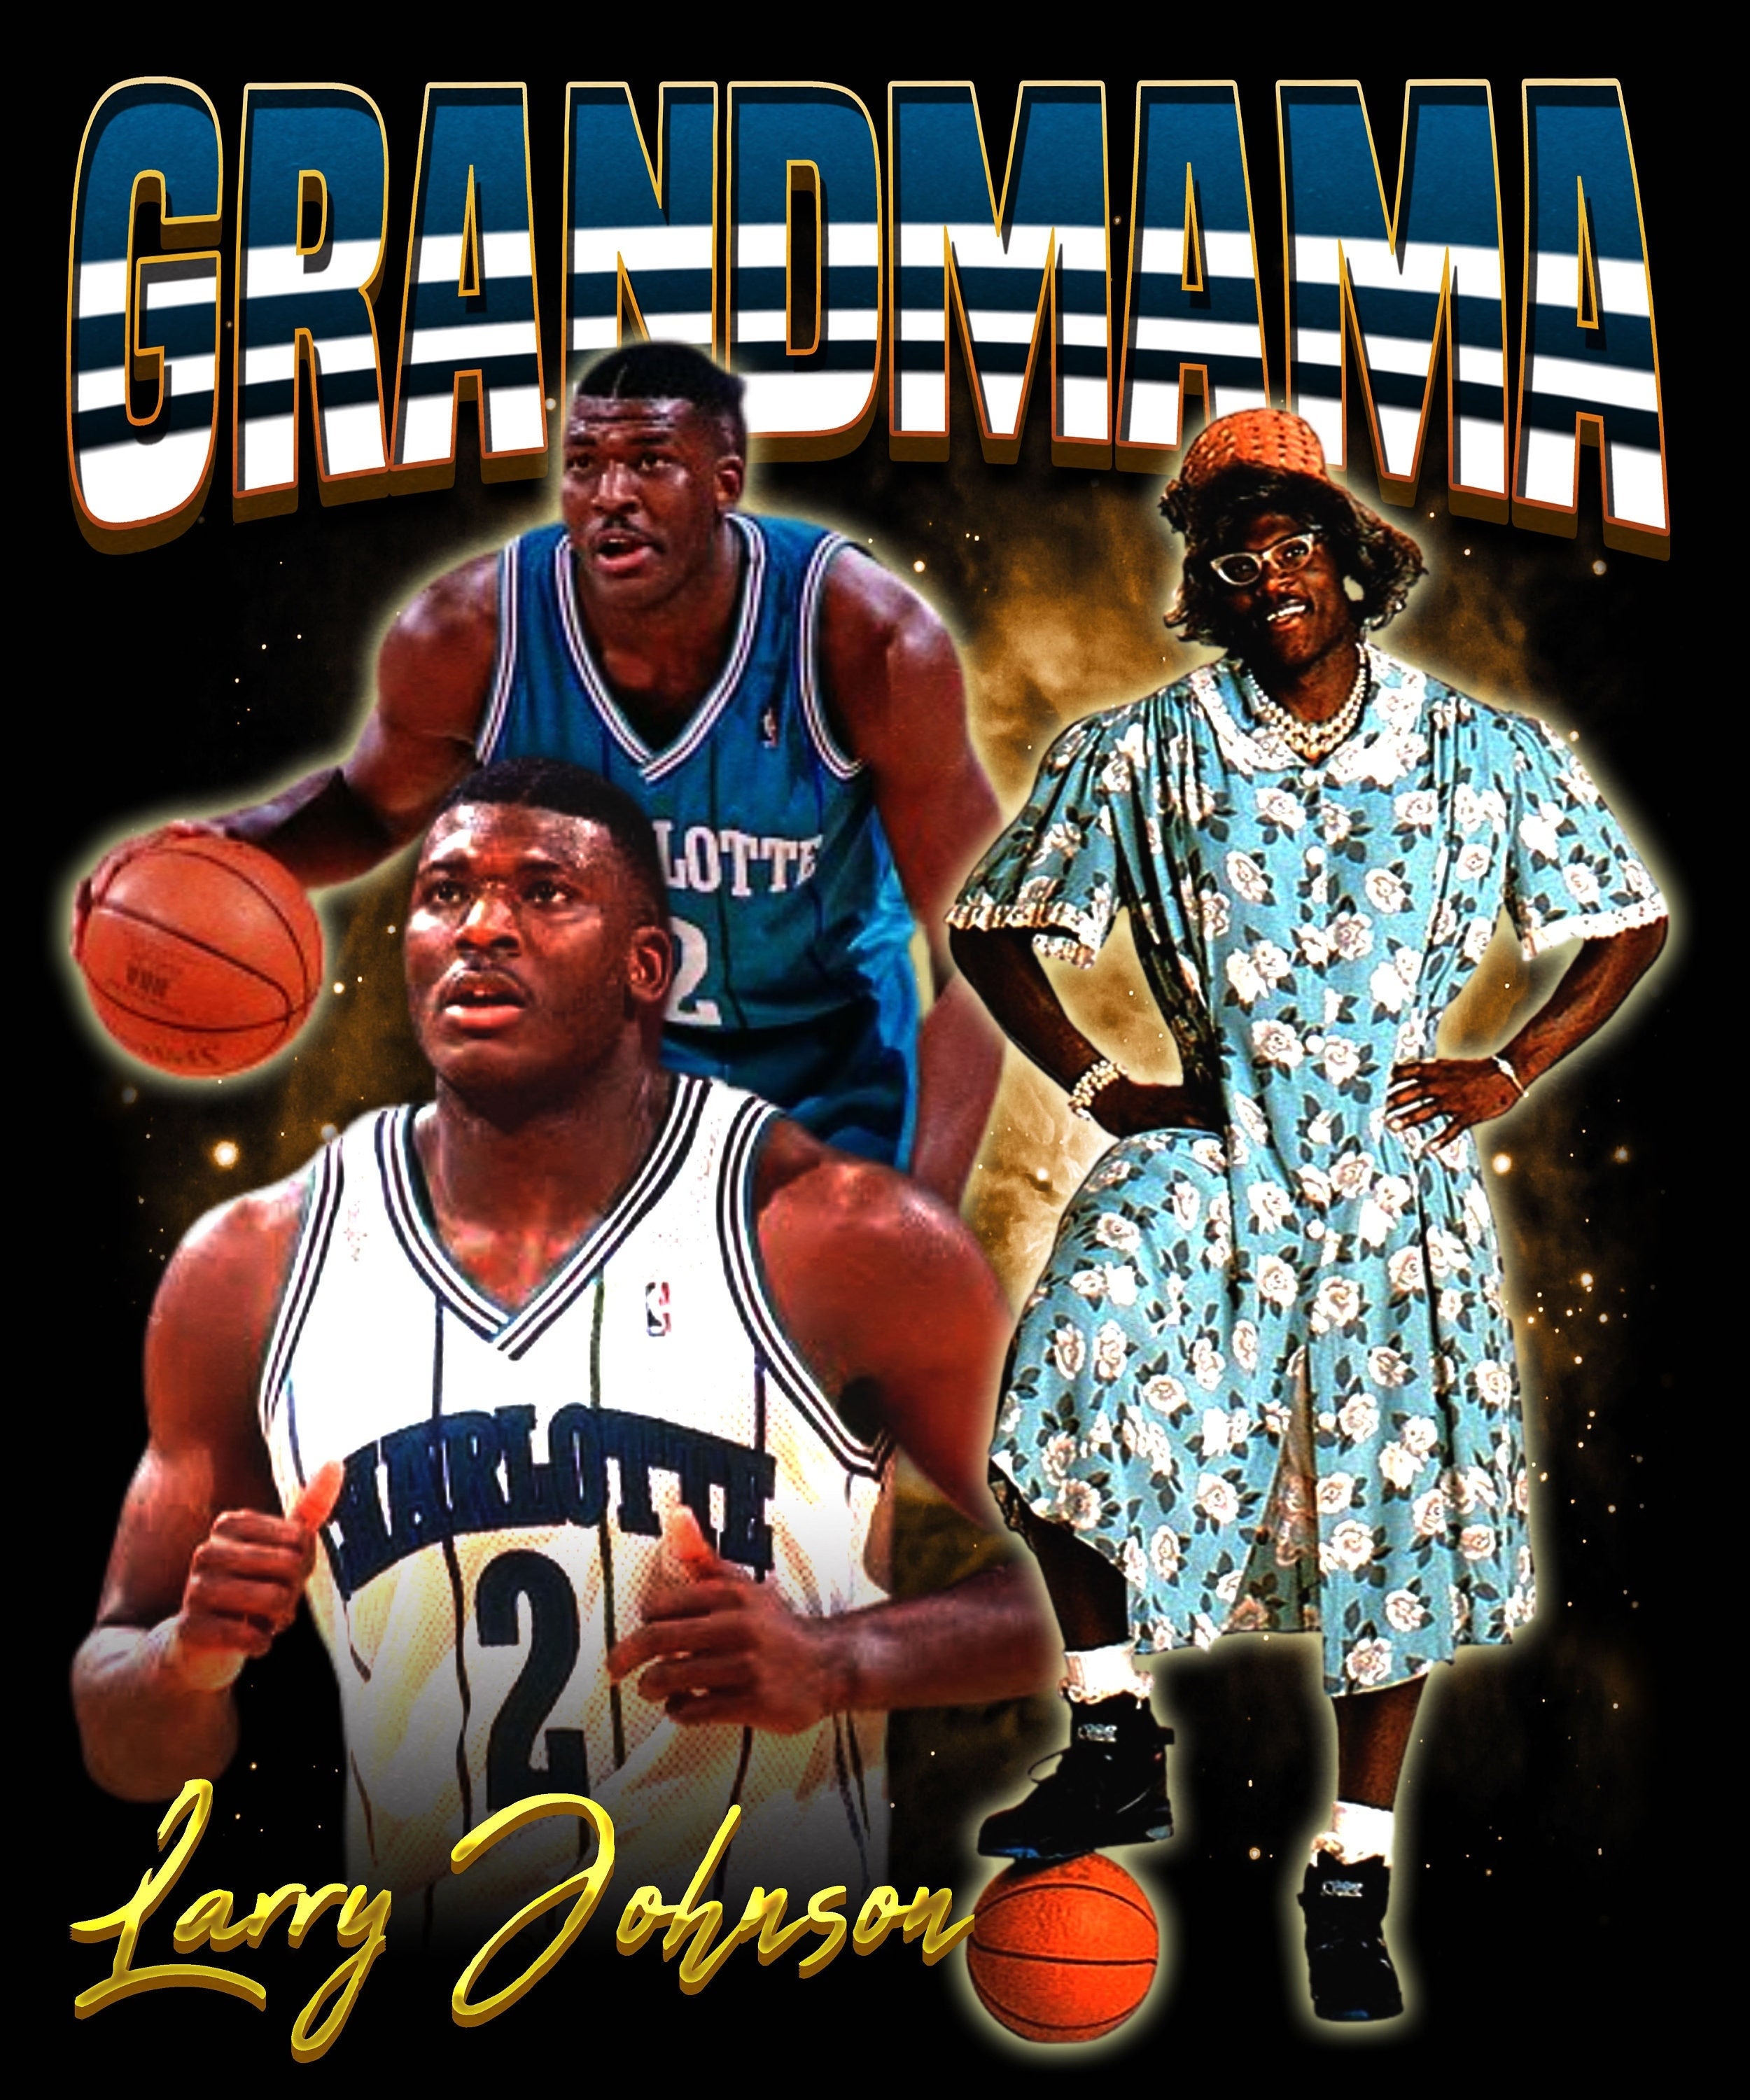 MINT VTG 90S NBA AUTHENTIC CHARLOTTE HORNETS LARRY JOHNSON JERSEY